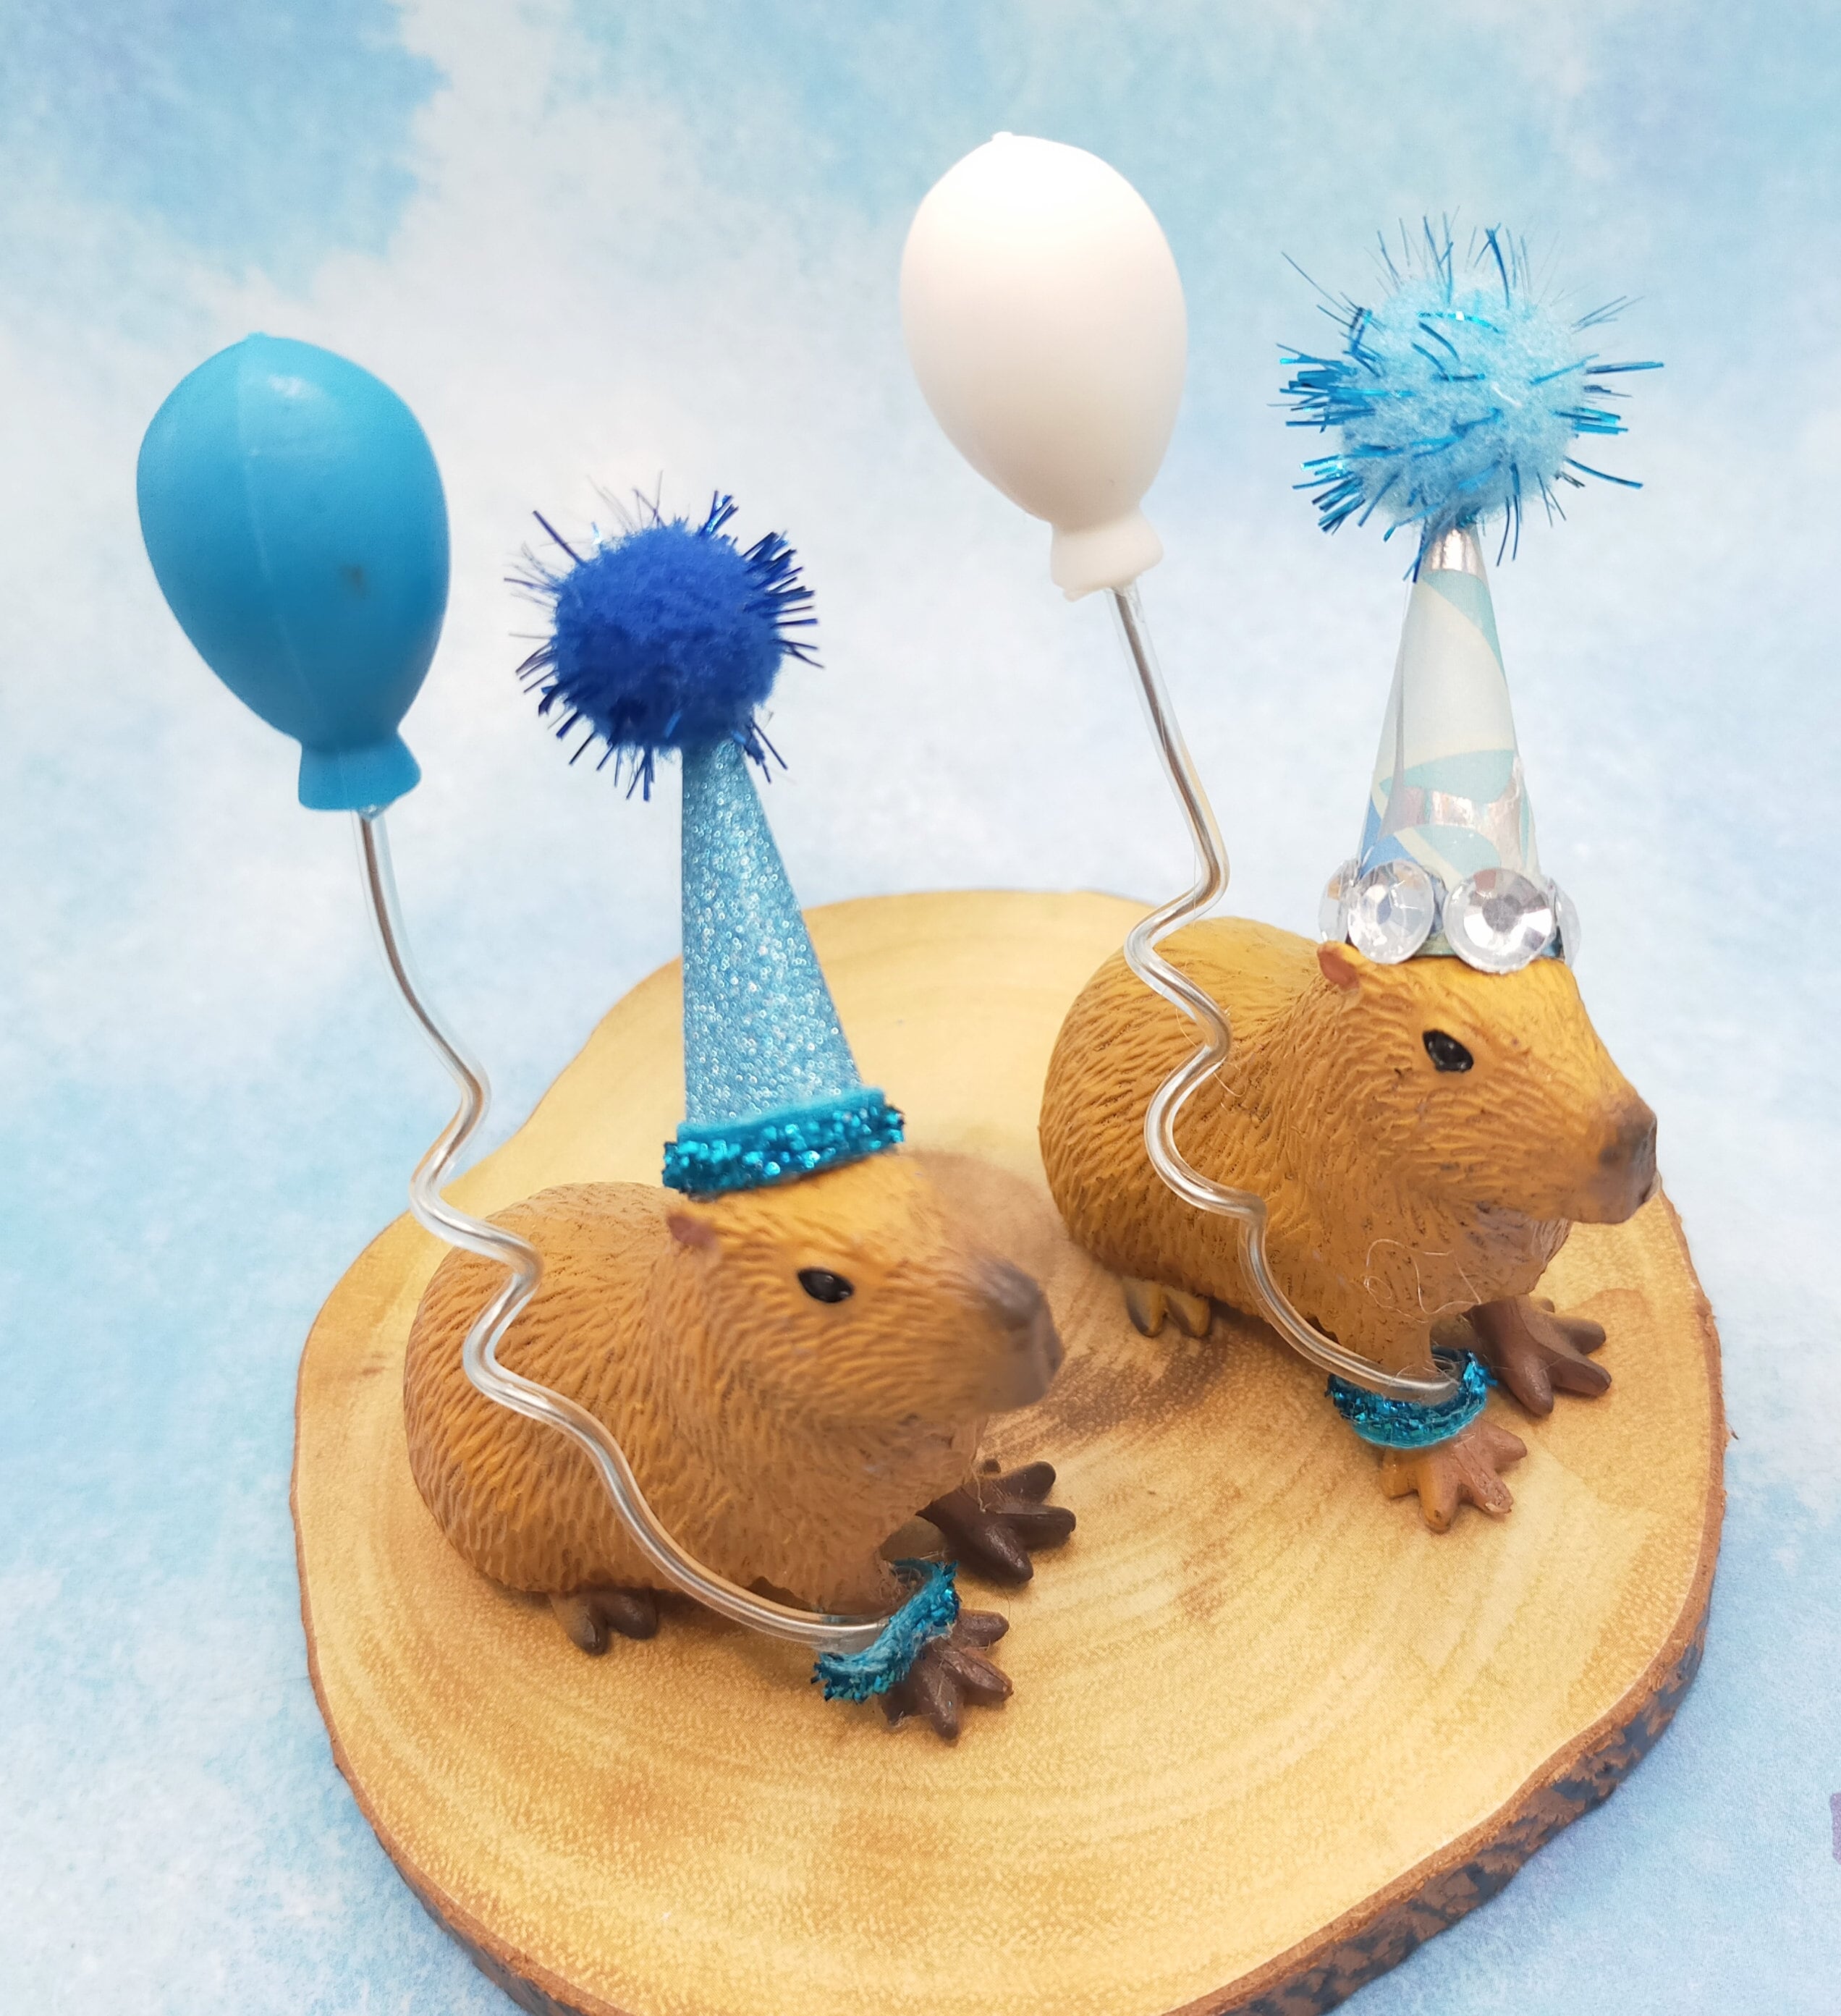 Capybara Cake Topper Cake Topper Party Decoration Party Animal